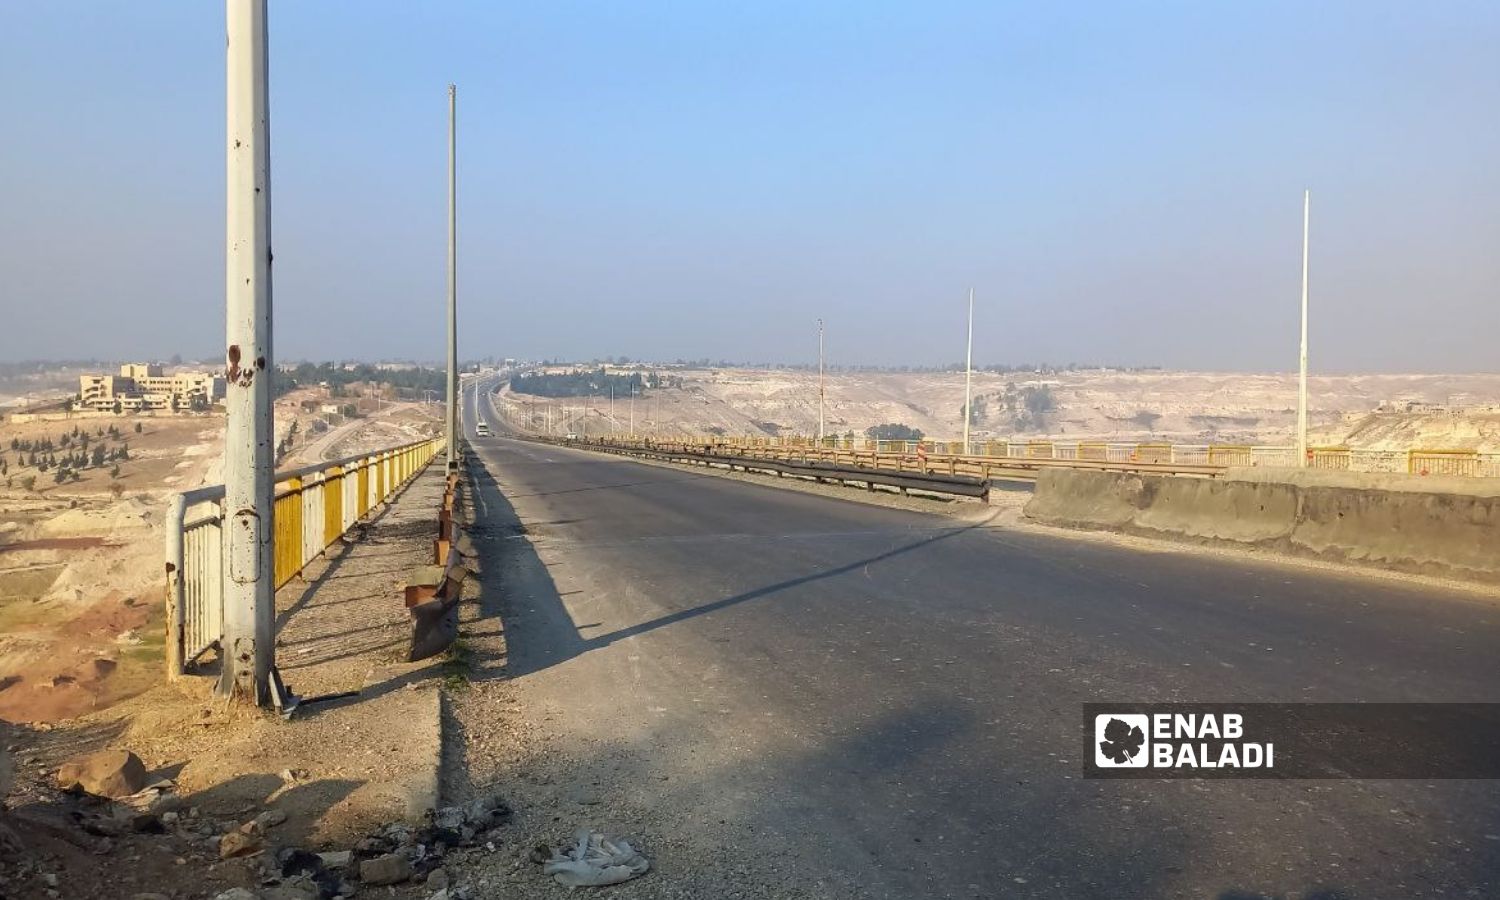 The international highway near the city of al-Rastan shows traffic almost at a standstill - 6 December 2022 (Homs / Orwah al-Mundhir)